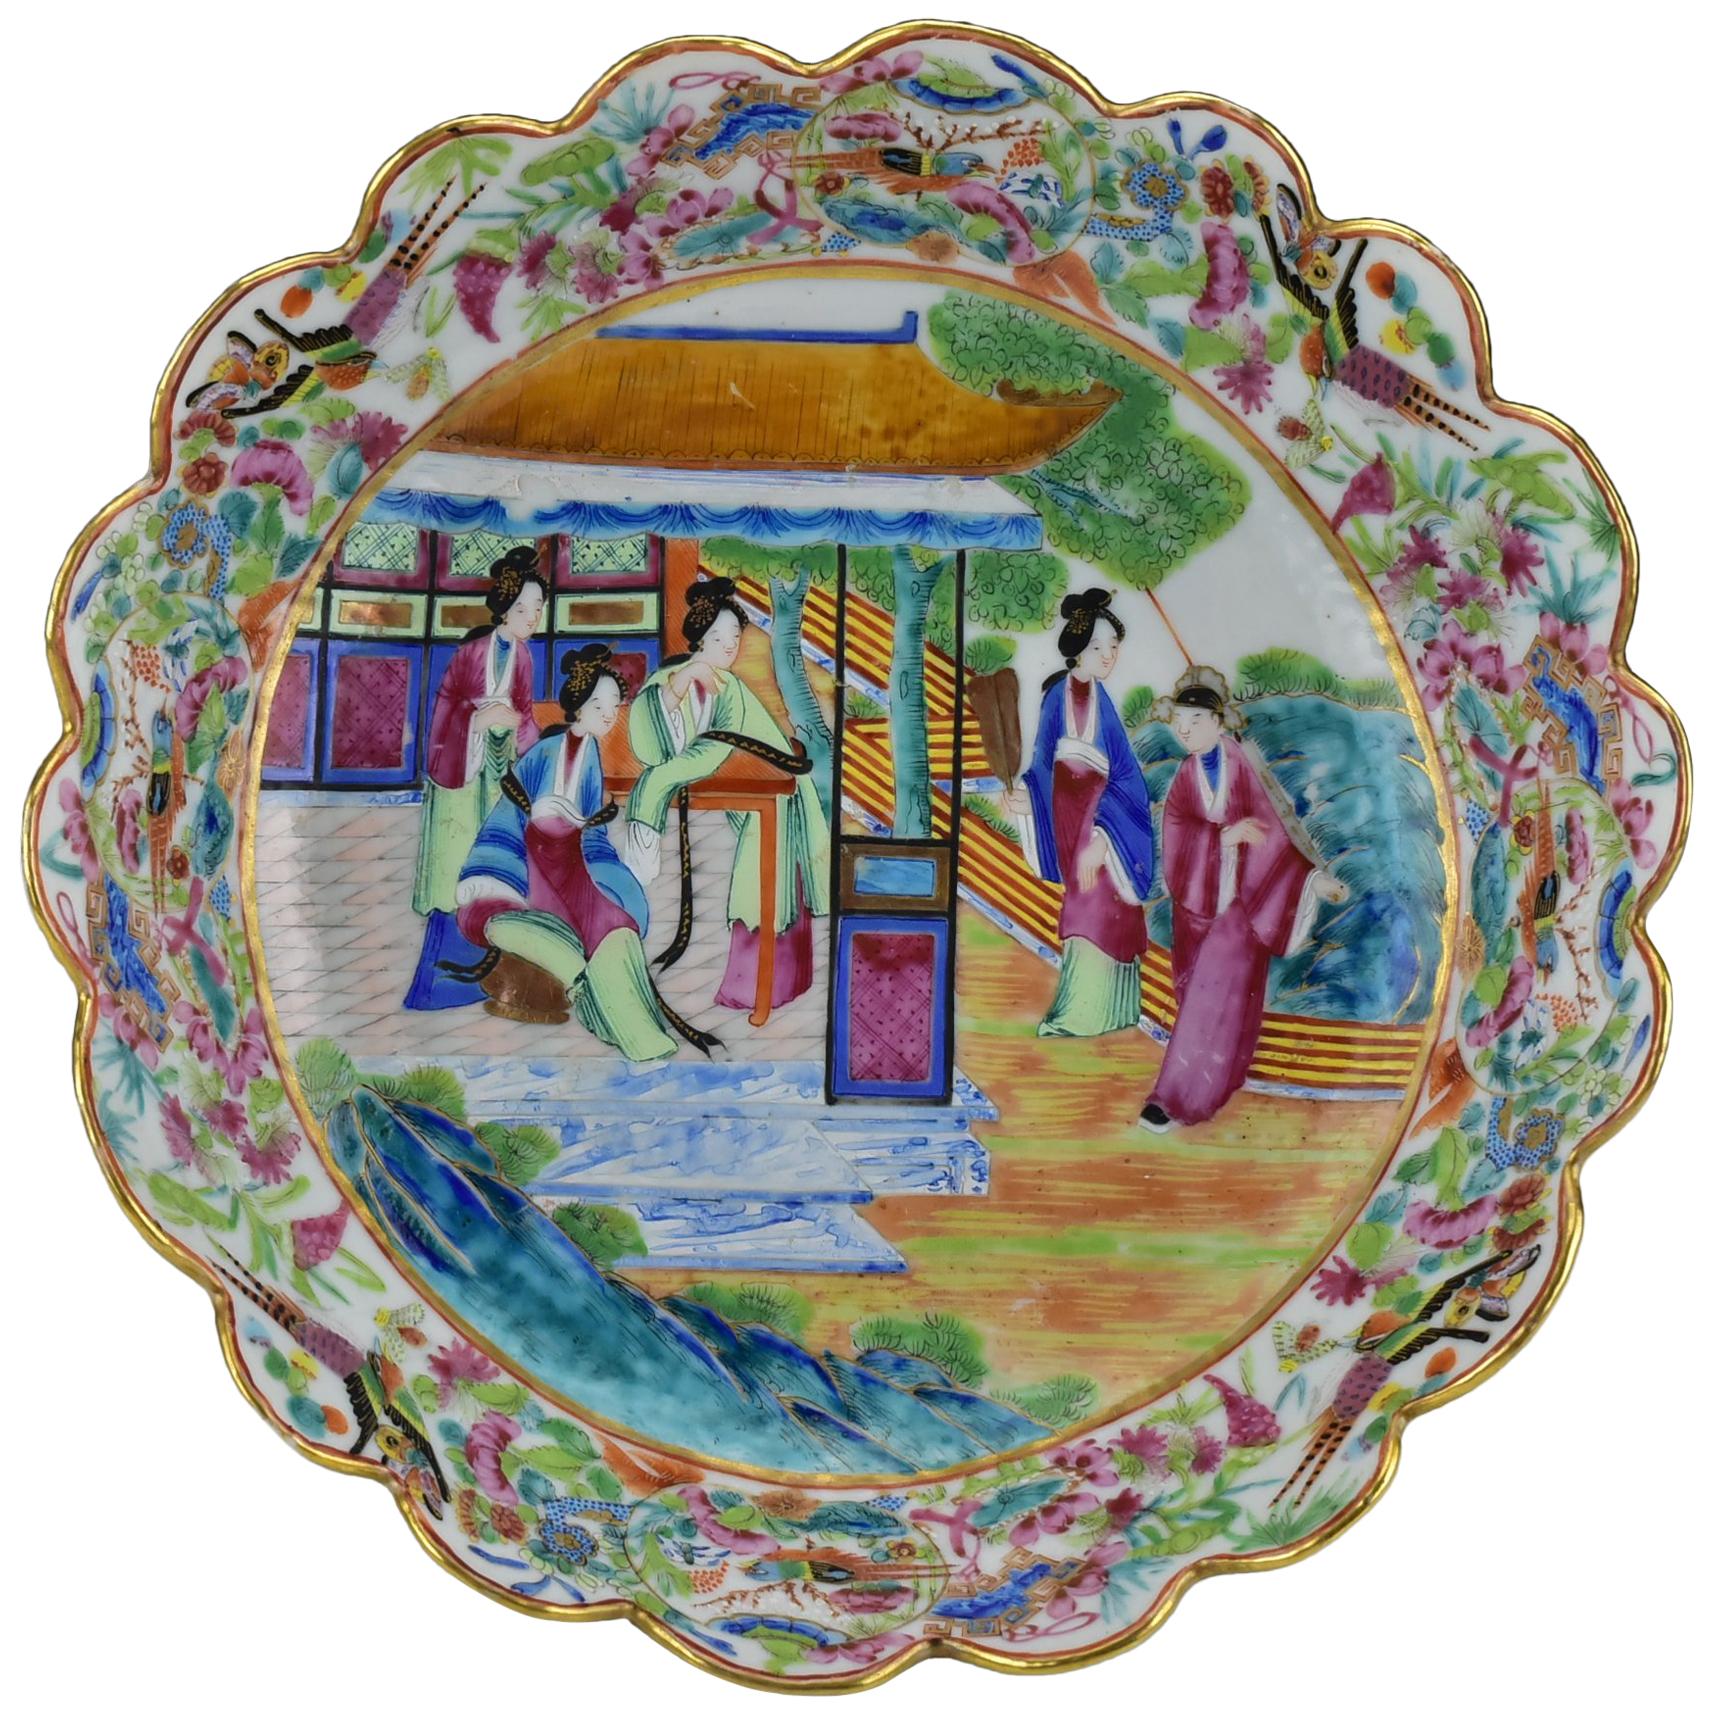 19th Century Chinese Rose Mandarin Porcelain Serving Bowl with Scalloped Rim